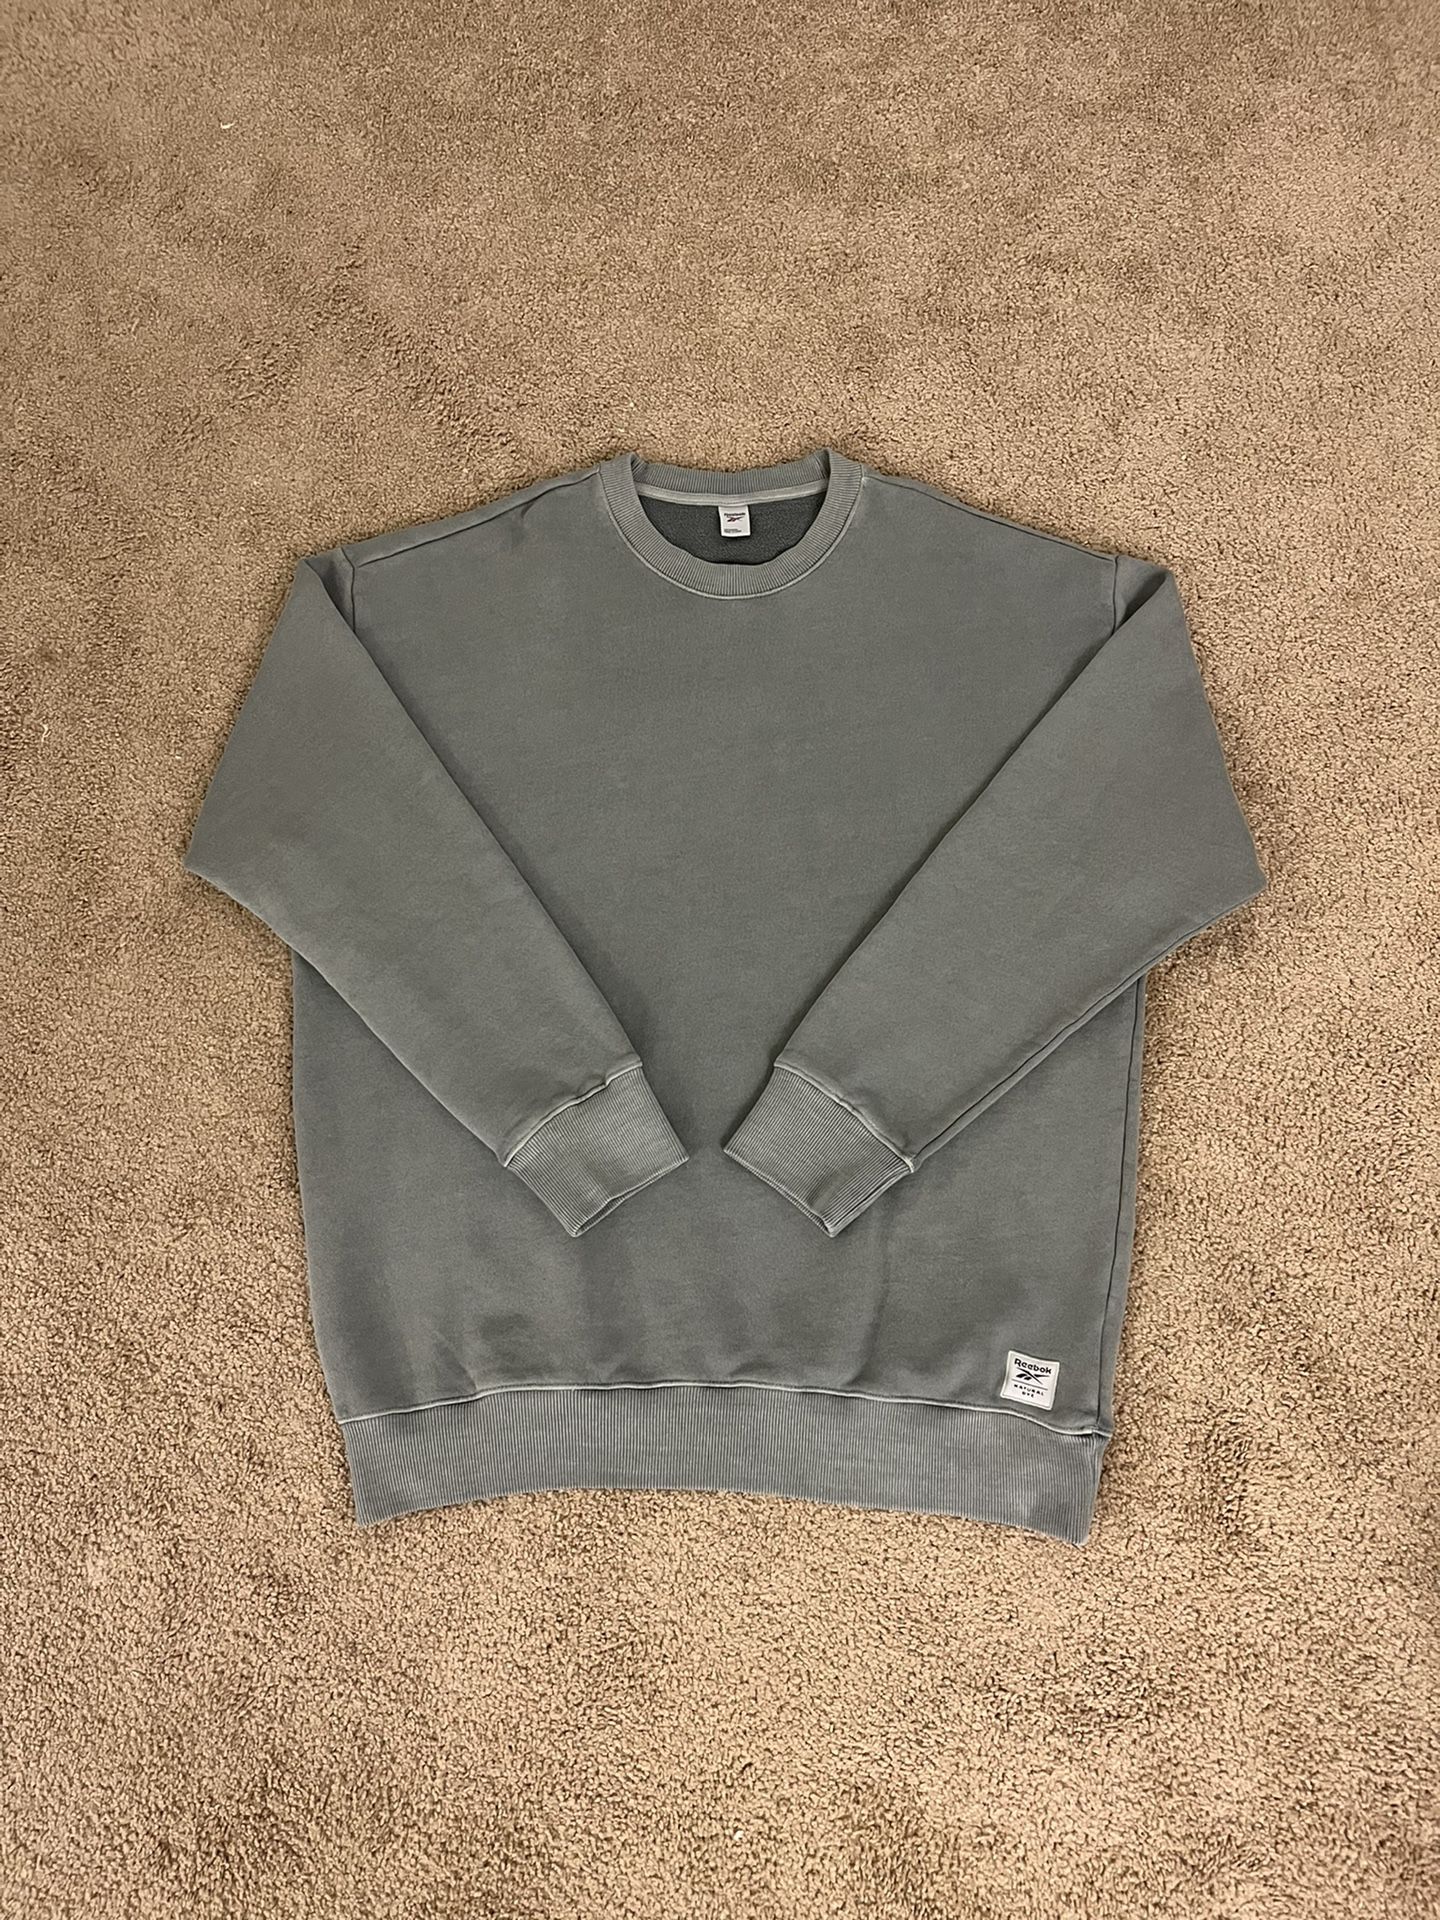 Reebok Crewneck Sweatshirt Size:L